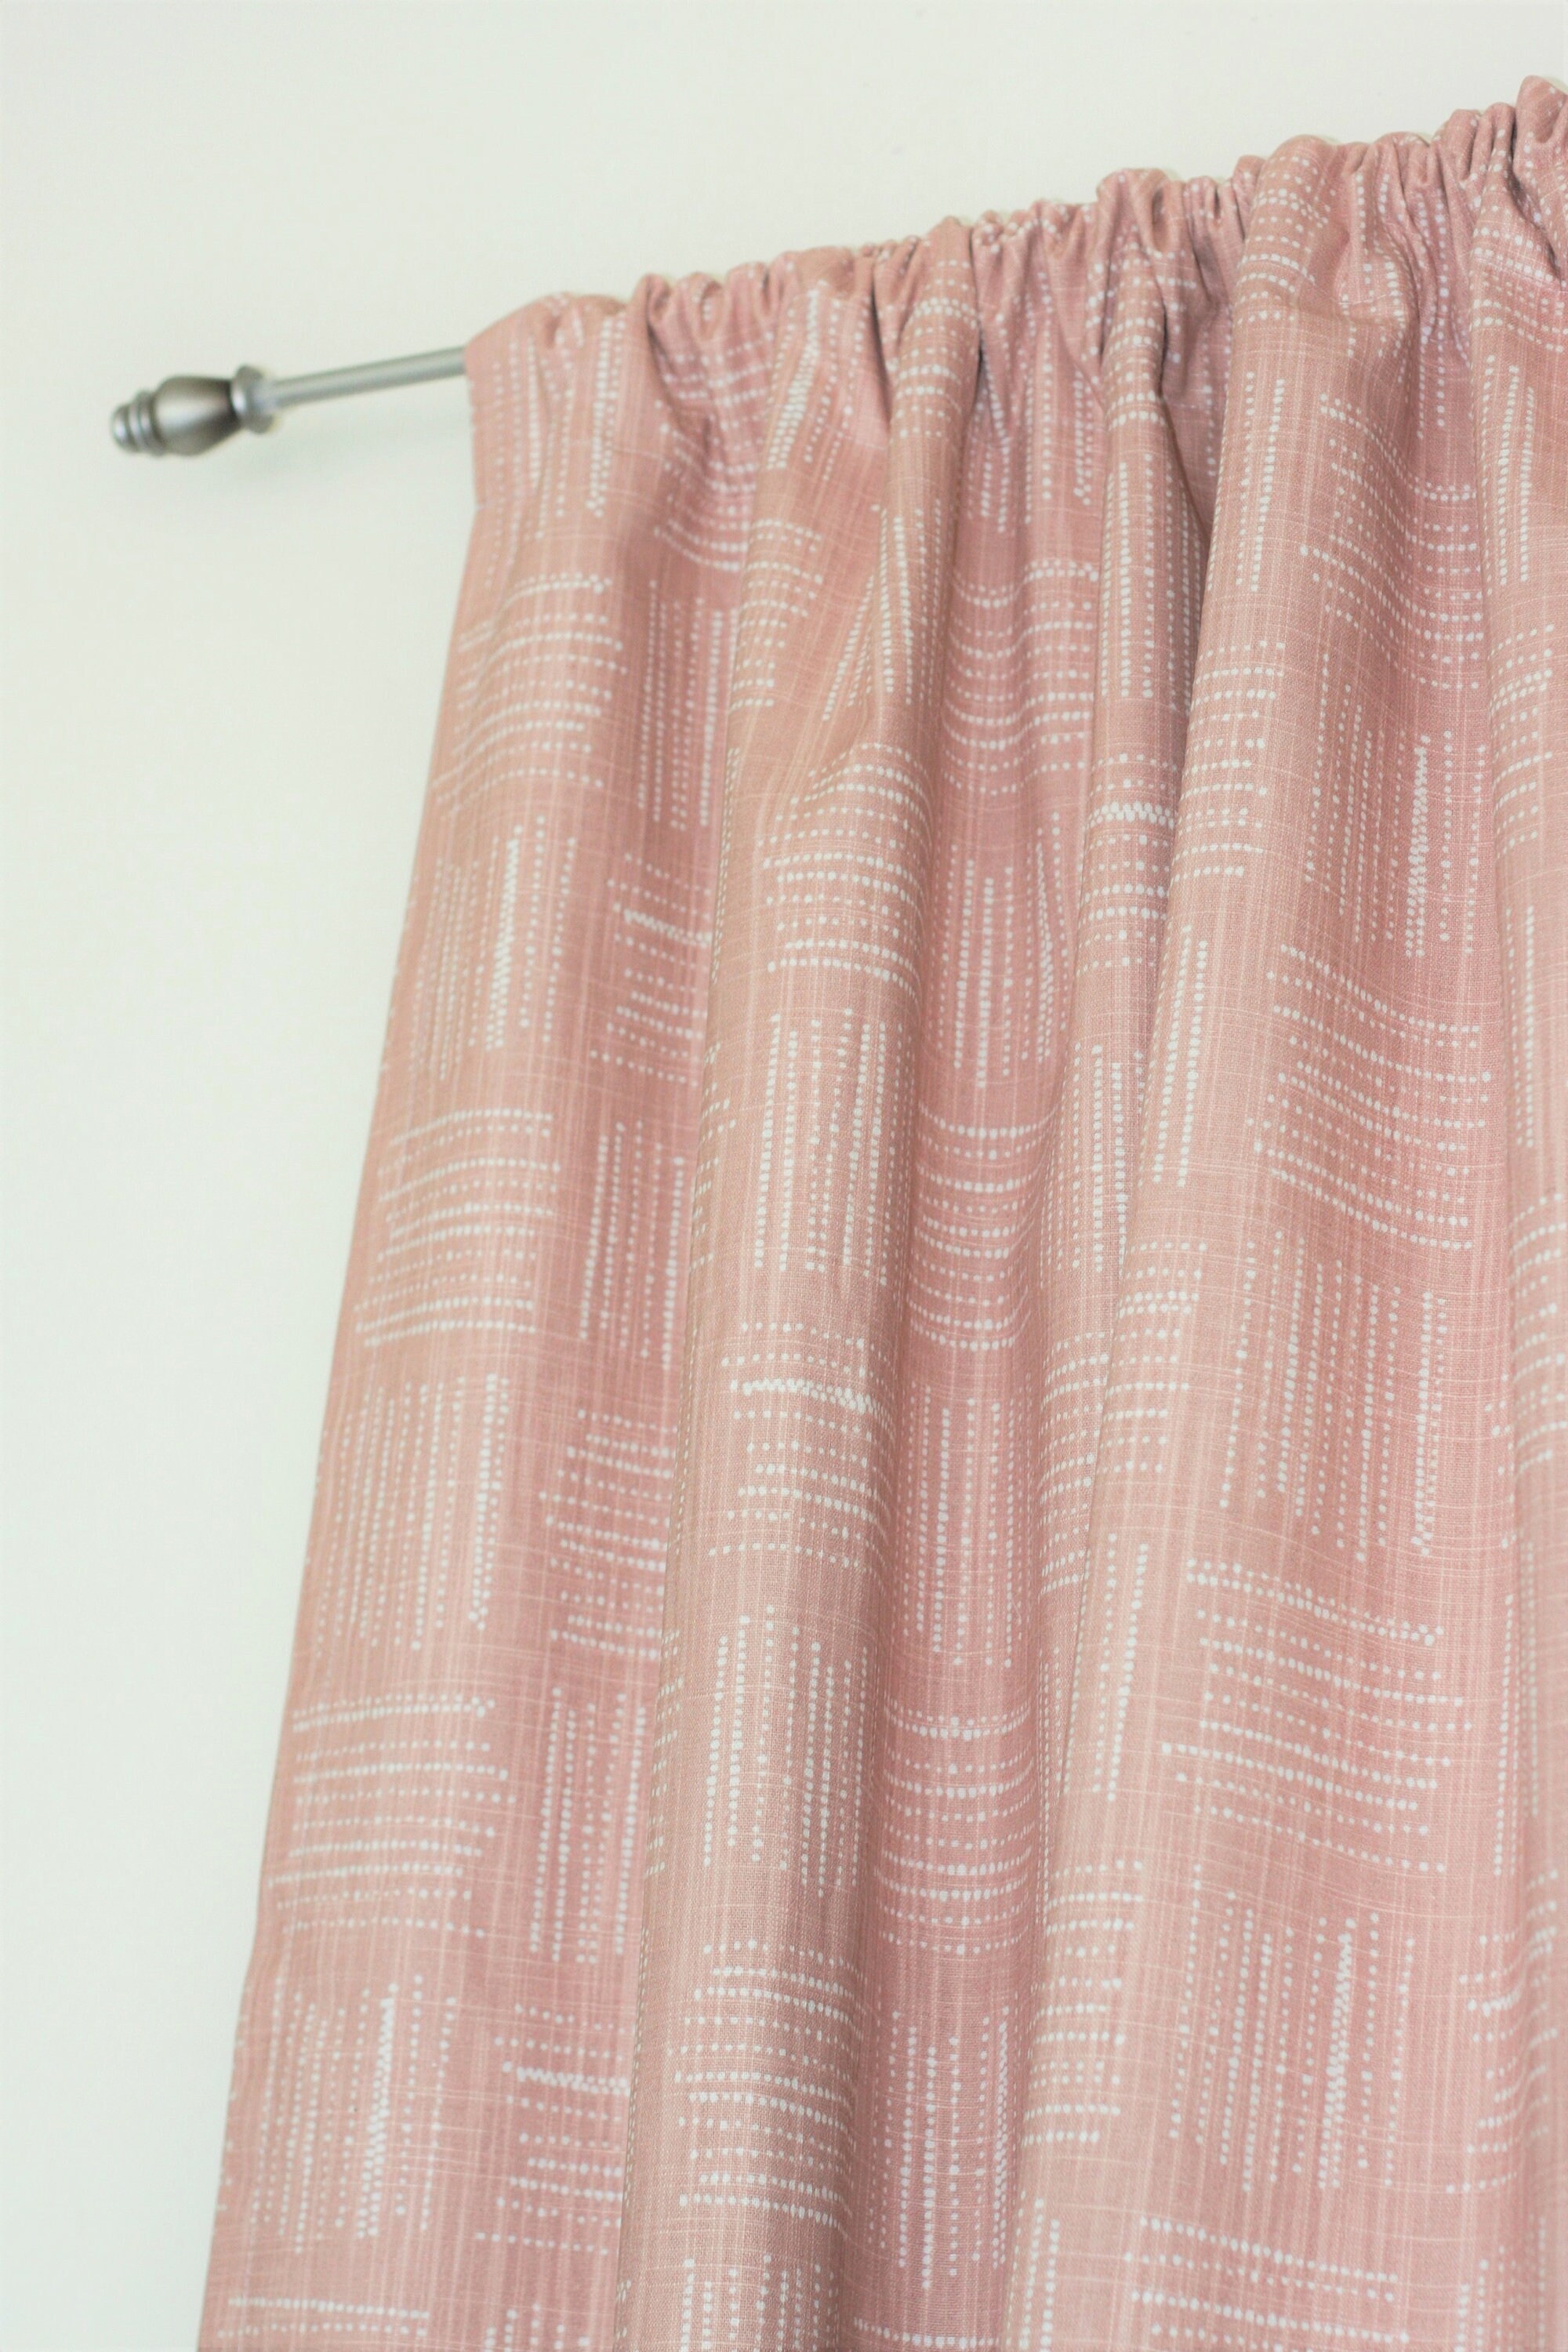 Blush Curtains Drapery Panel Pair Light Pink Curtains | Etsy